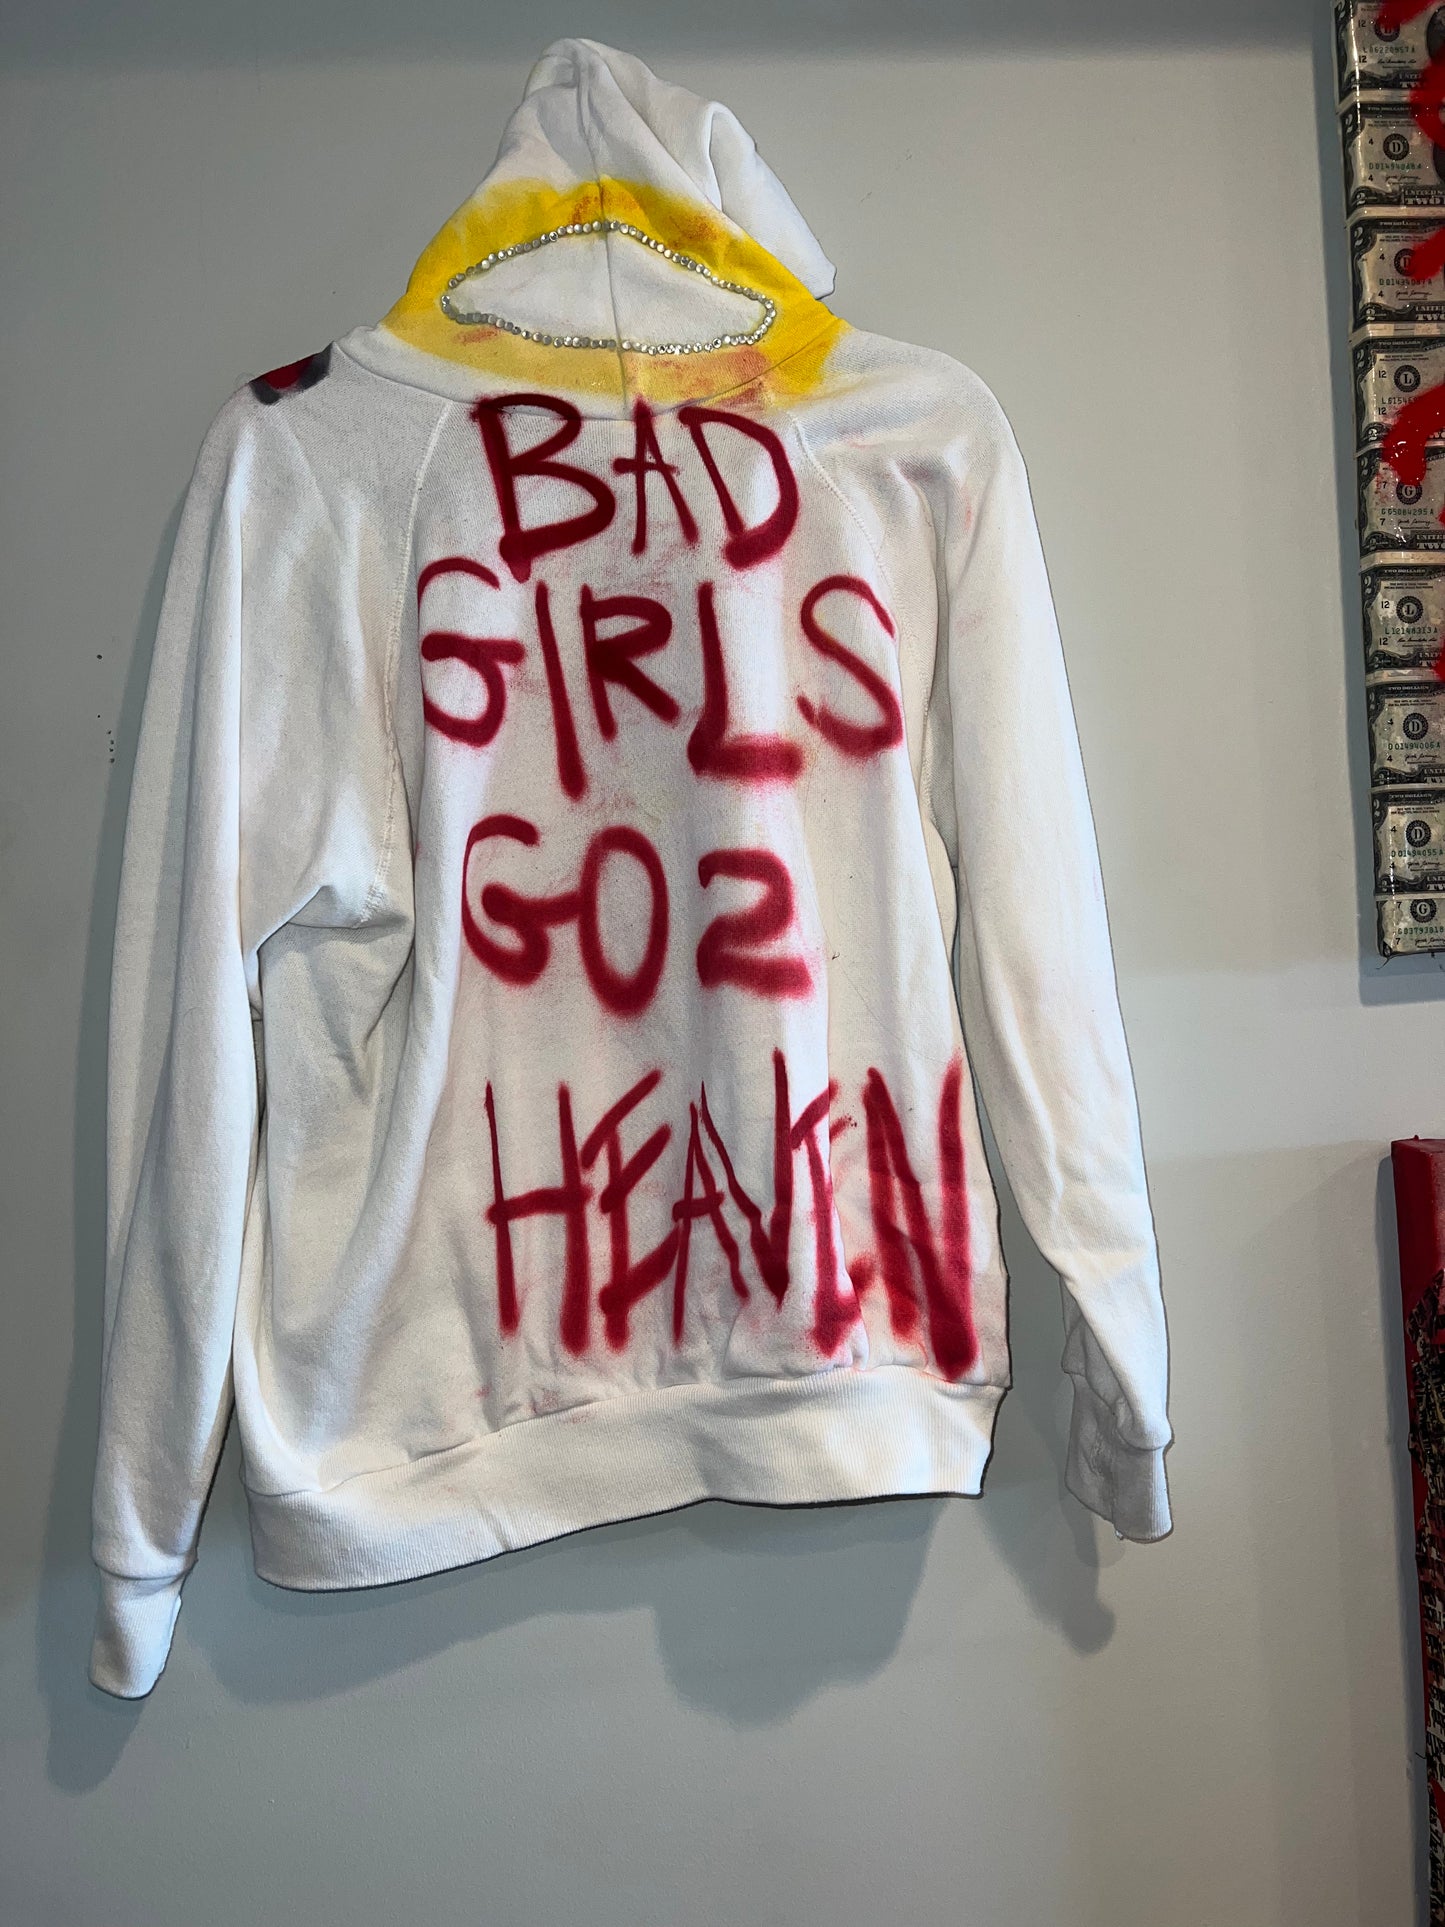 Bad girls go 2 Heaven